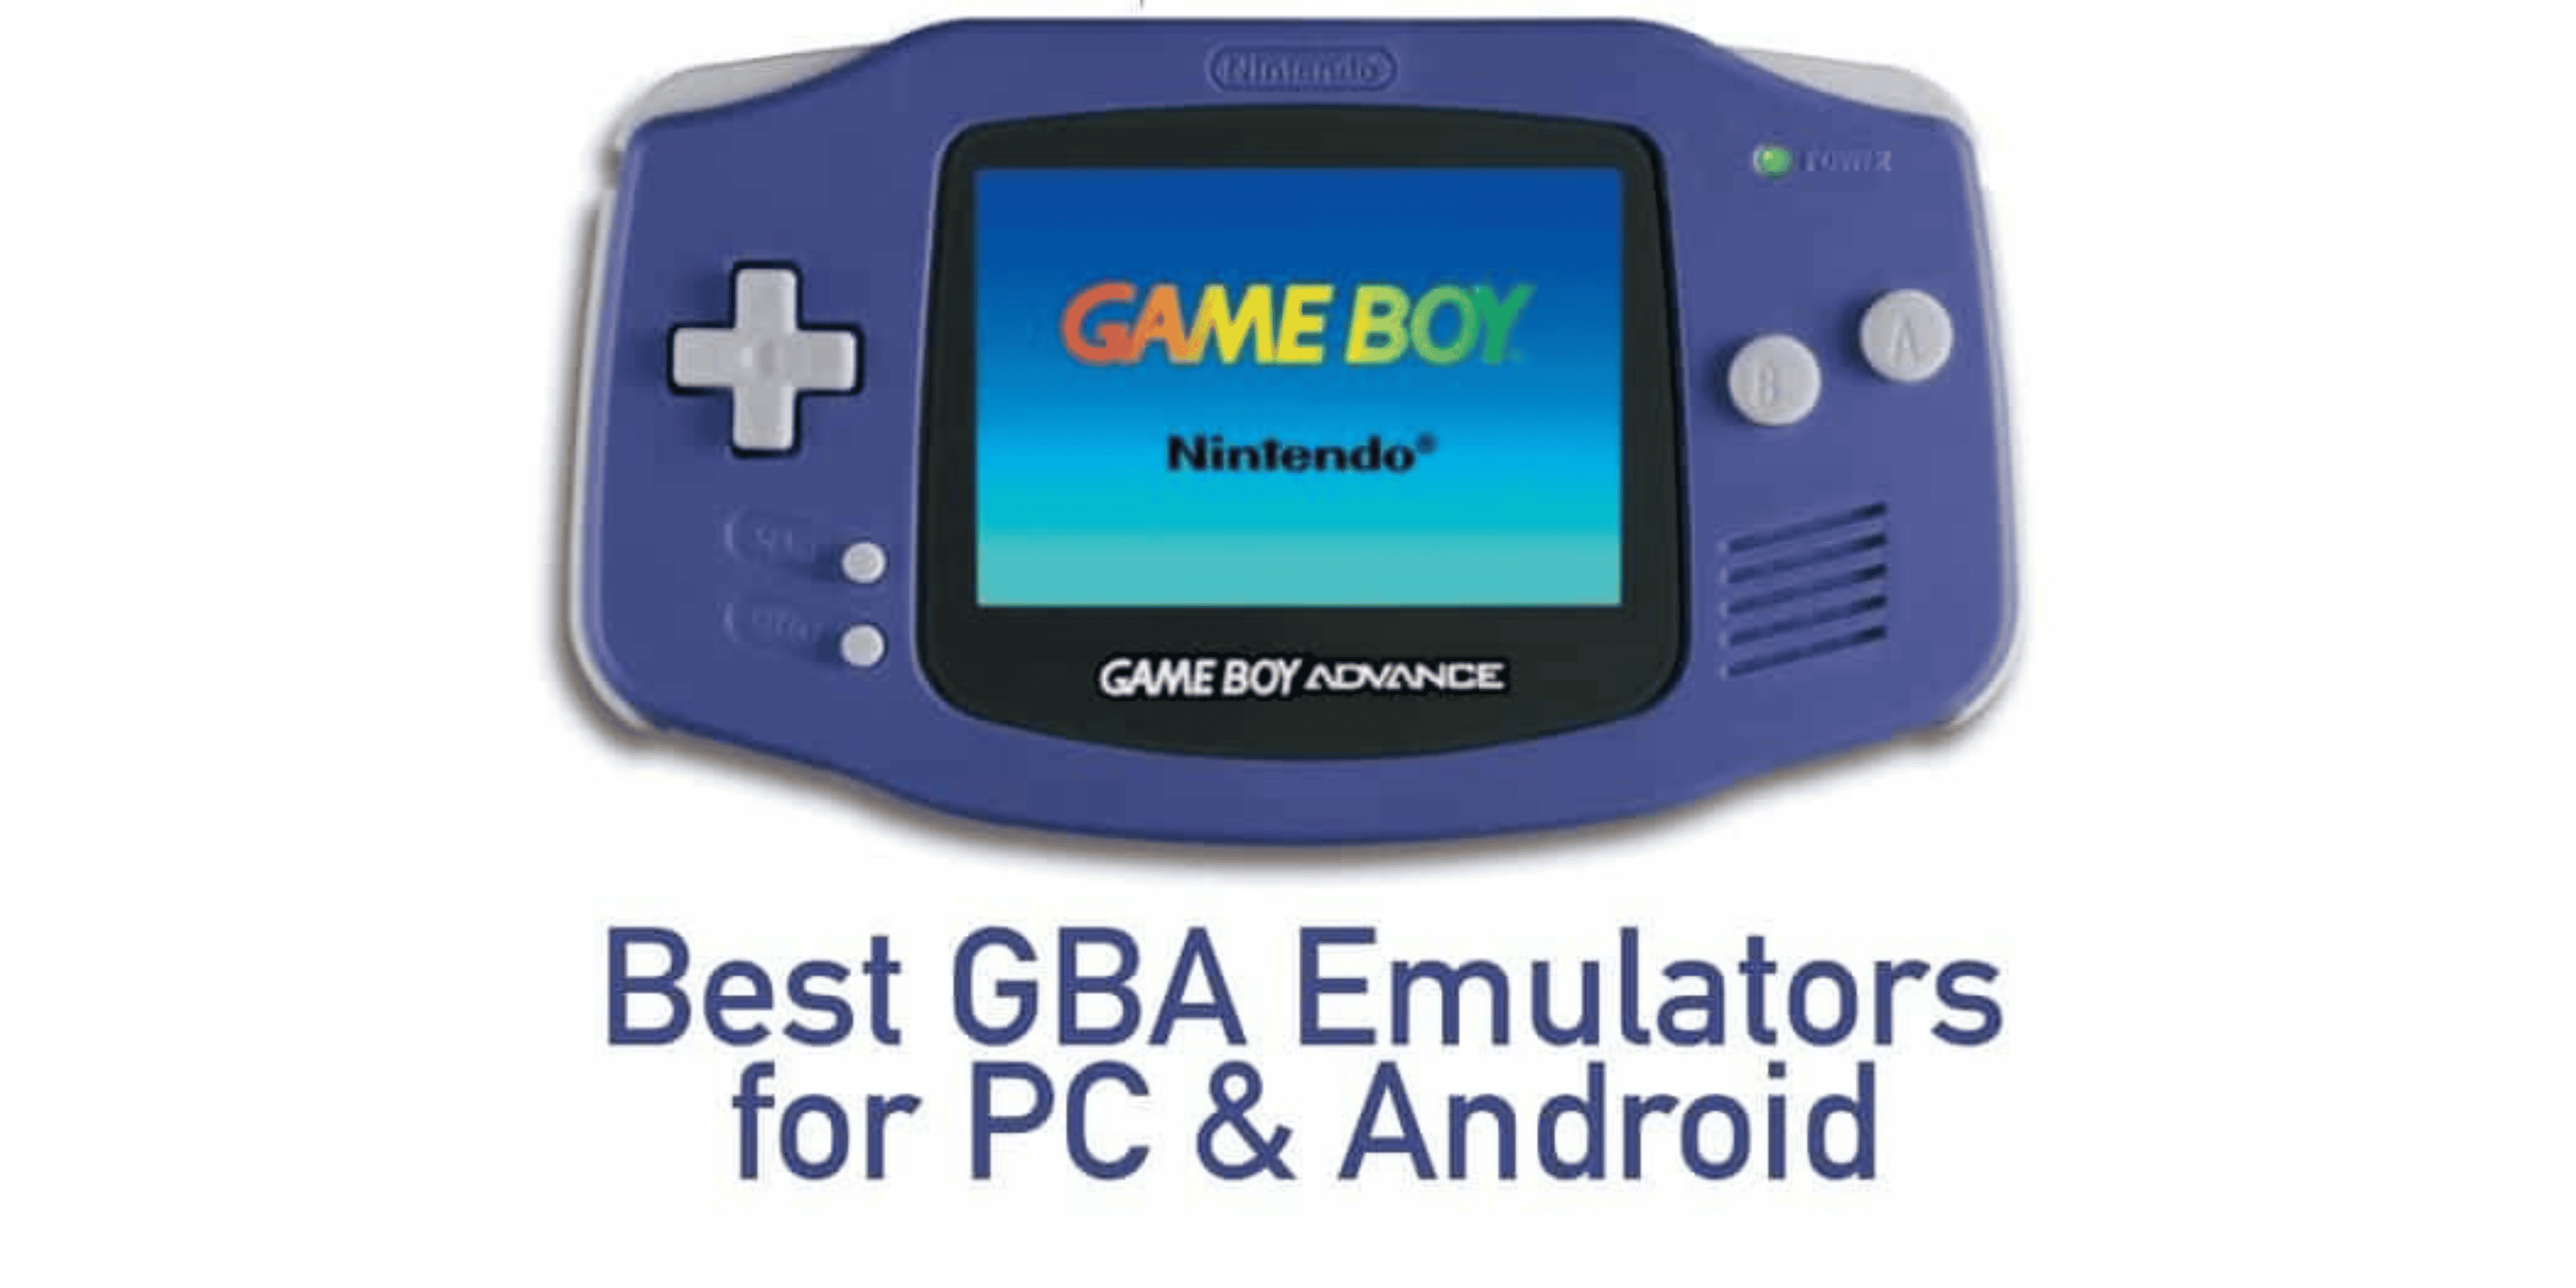 Gameboy Advance Emulator